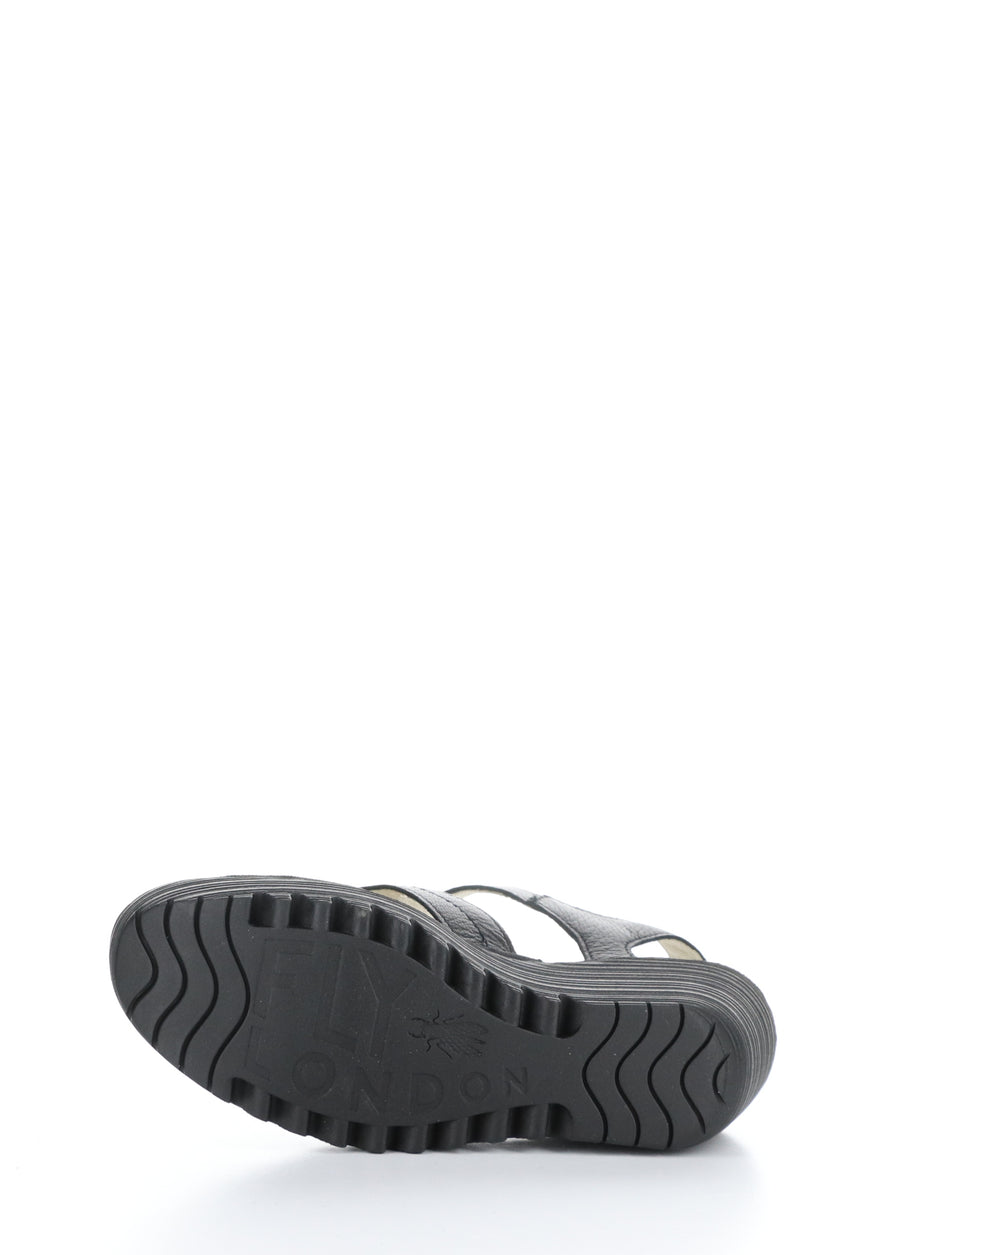 YOTU472FLY BLACK Velcro Sandals